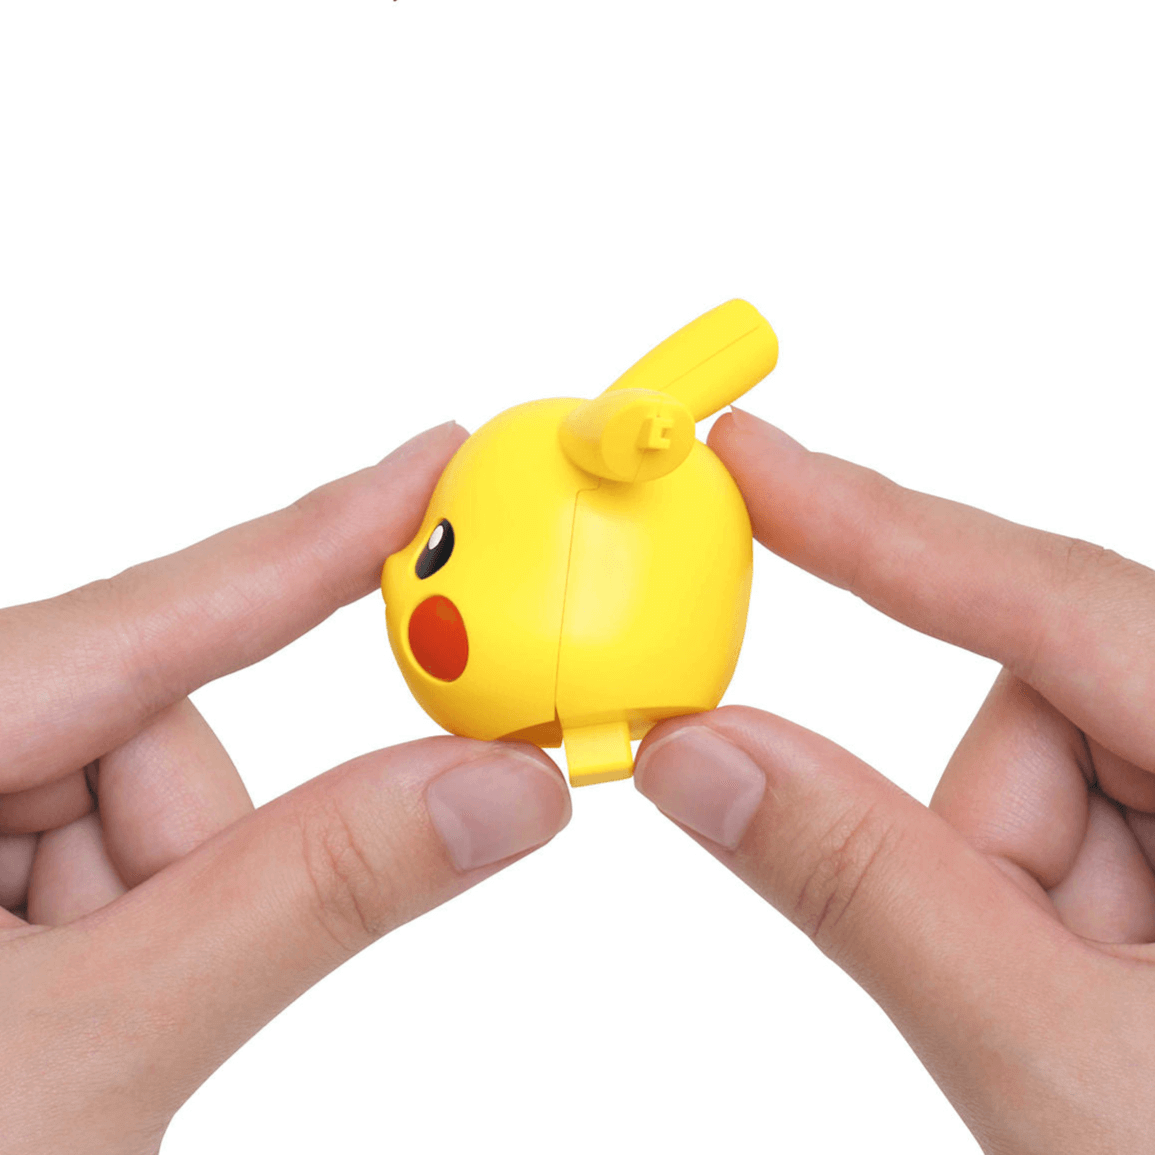 01 Pikachu Model kit - Pokémon Plamo Quick! Collection - konbinistop